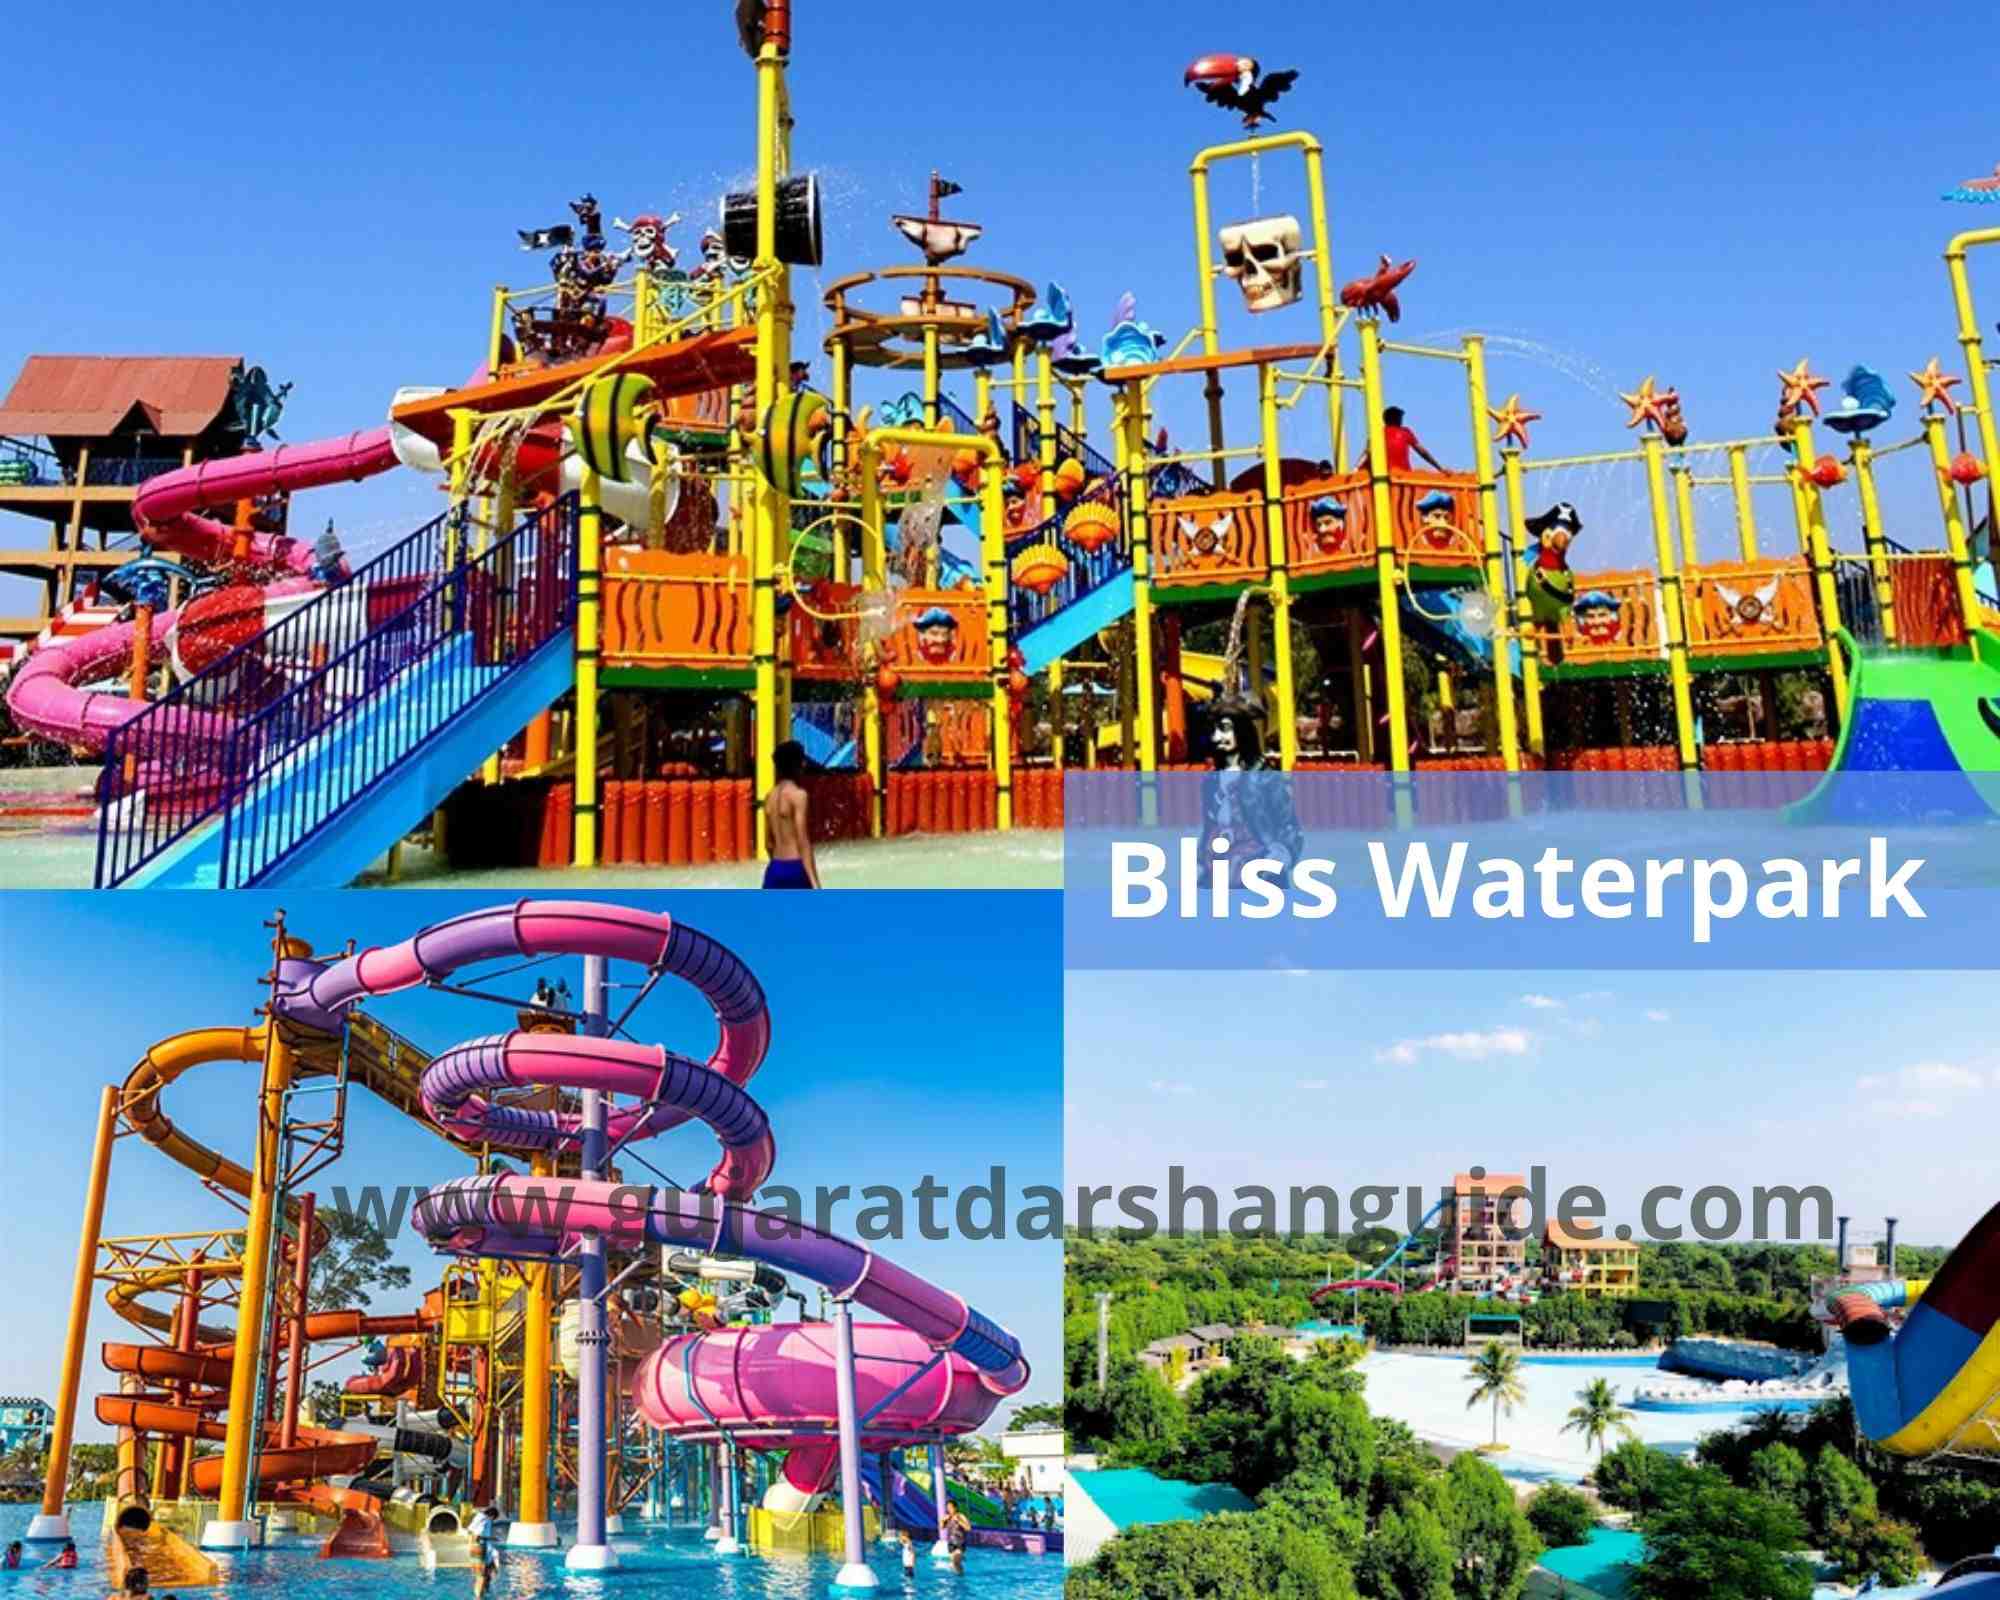 Bliss Waterpark